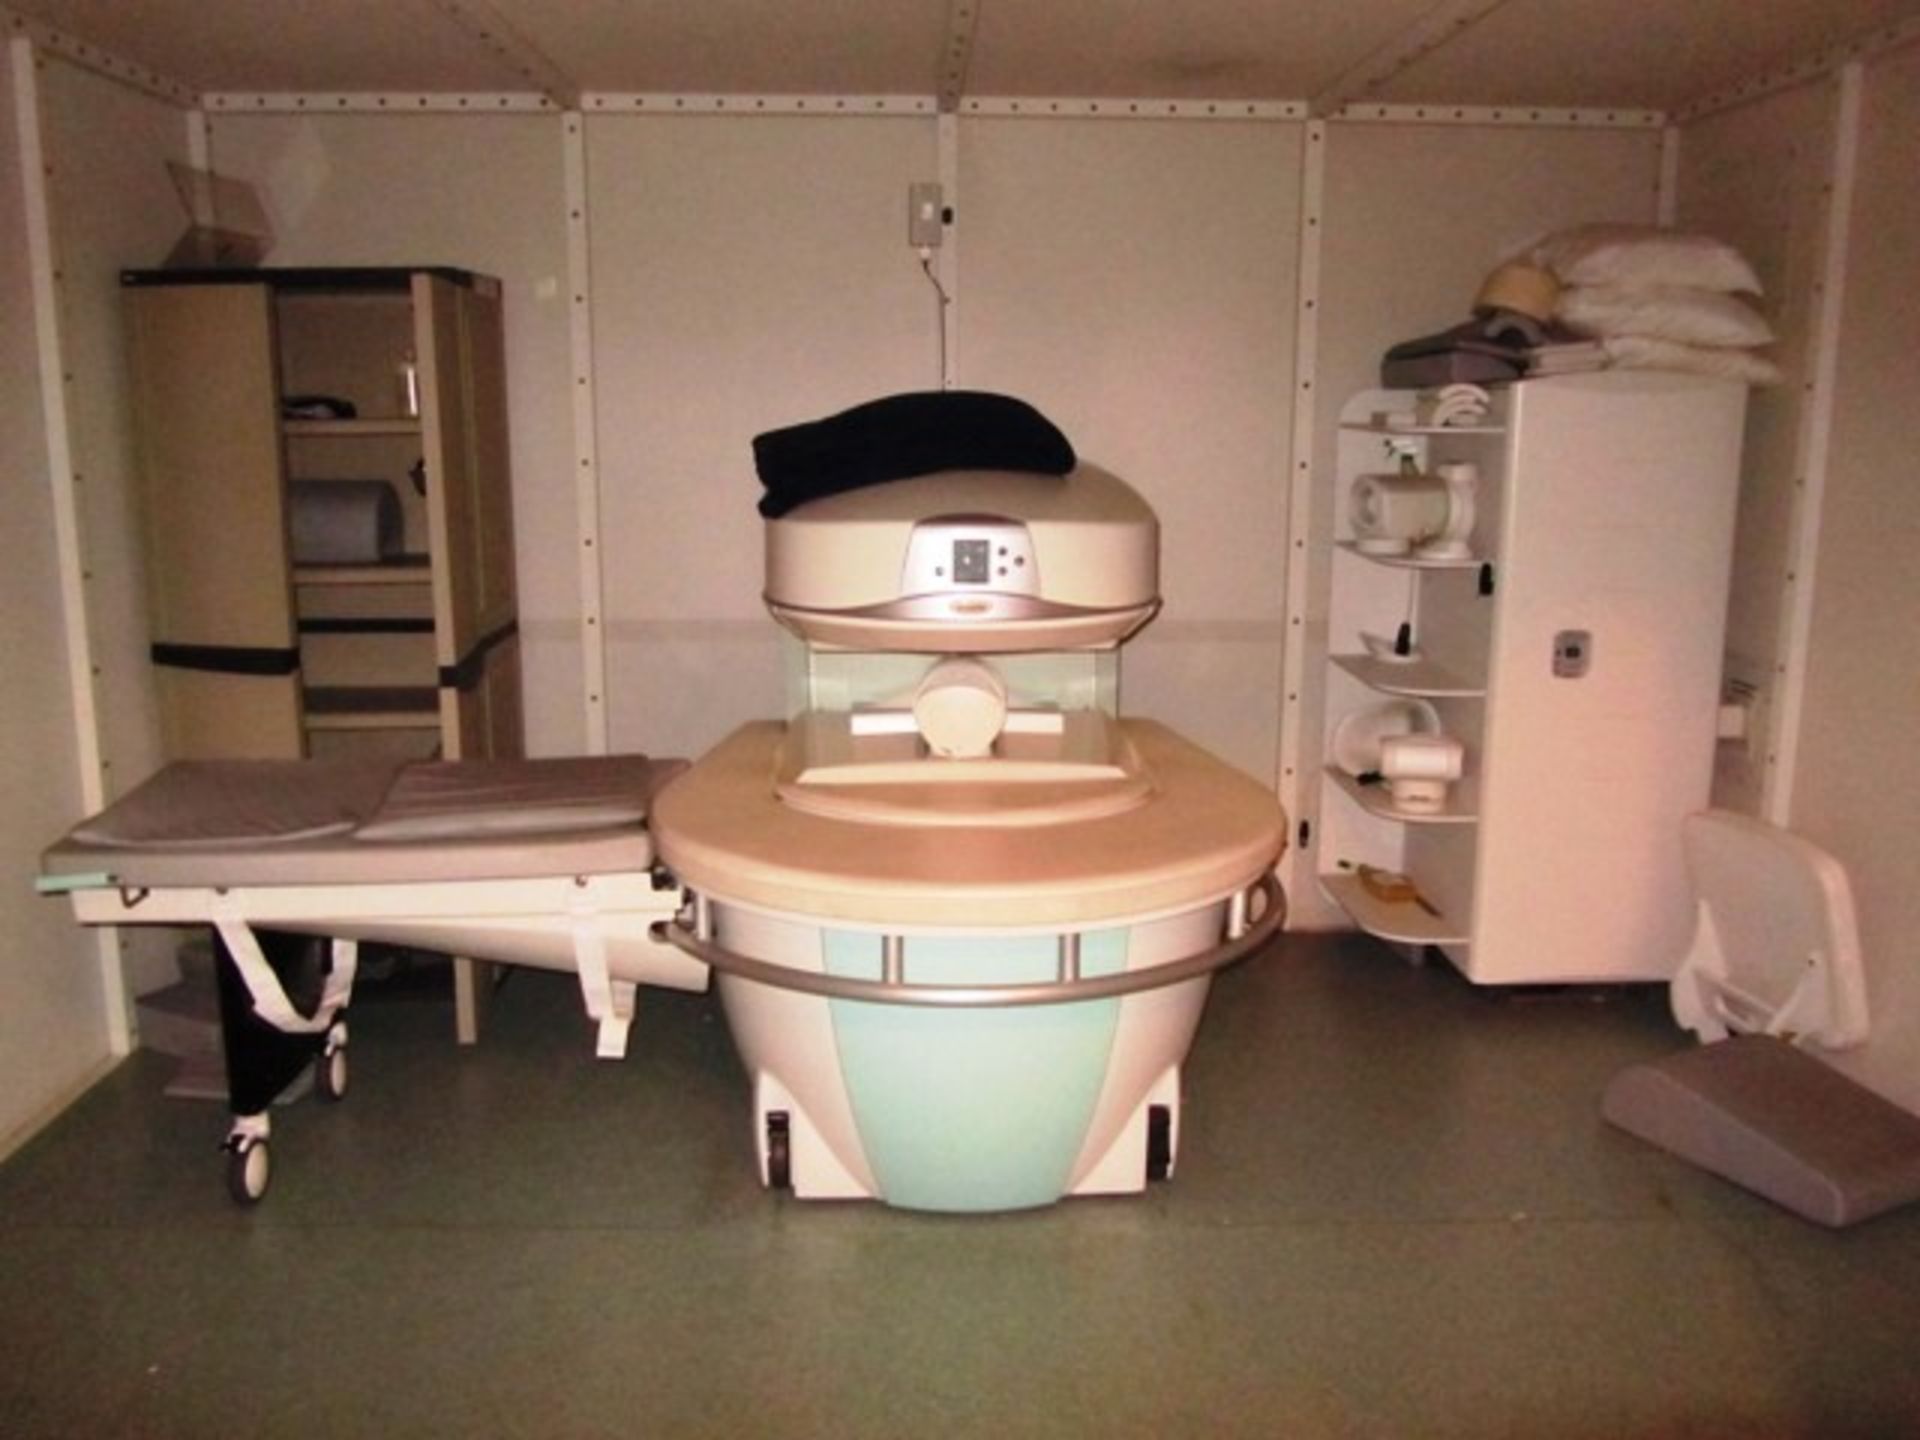 Contents of MRI Room consisting of Esaote EScan Opera MRI Machine, sn:02703, Work Desk, Monitor*